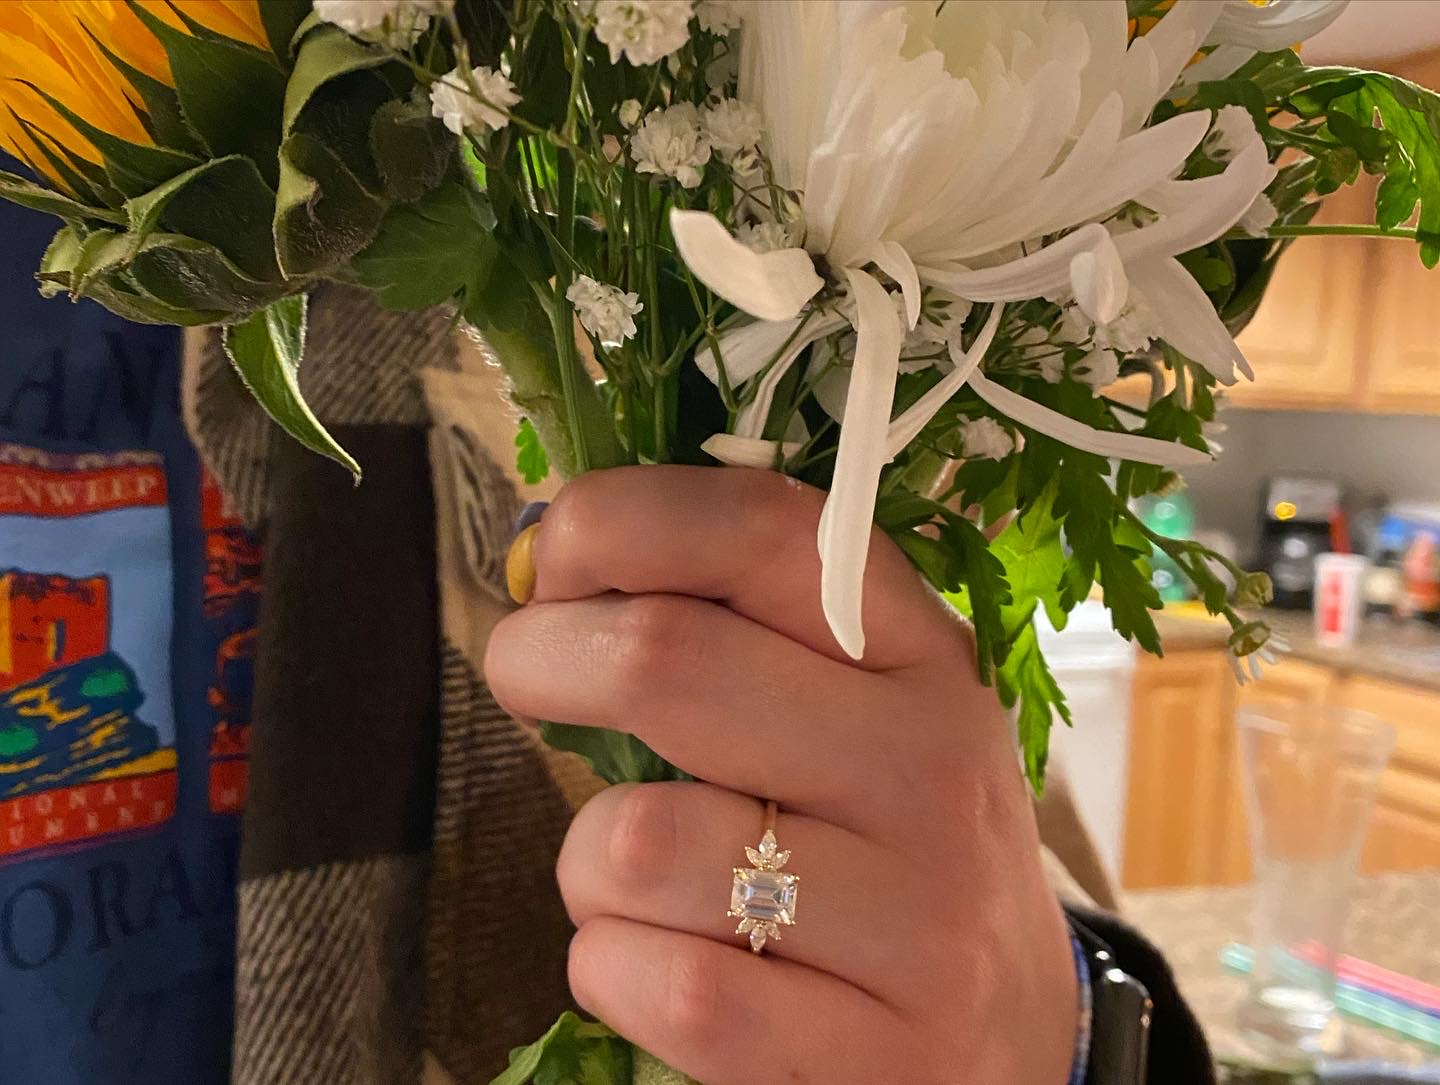 Jolie's engagement ring